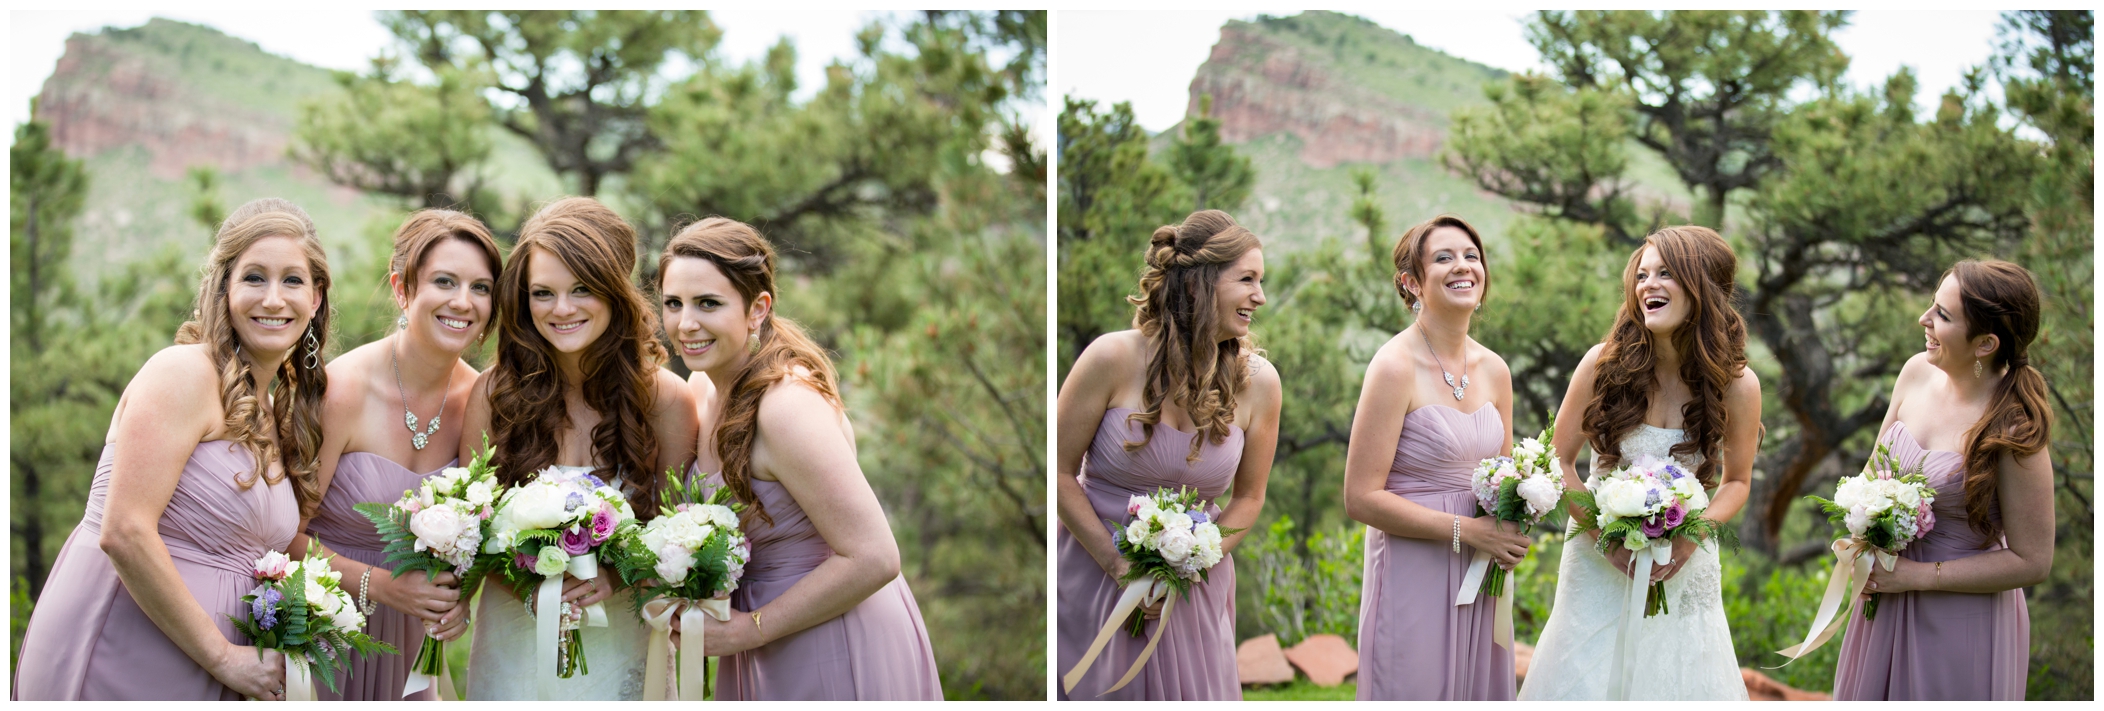 lilac bridesmaids dresses 